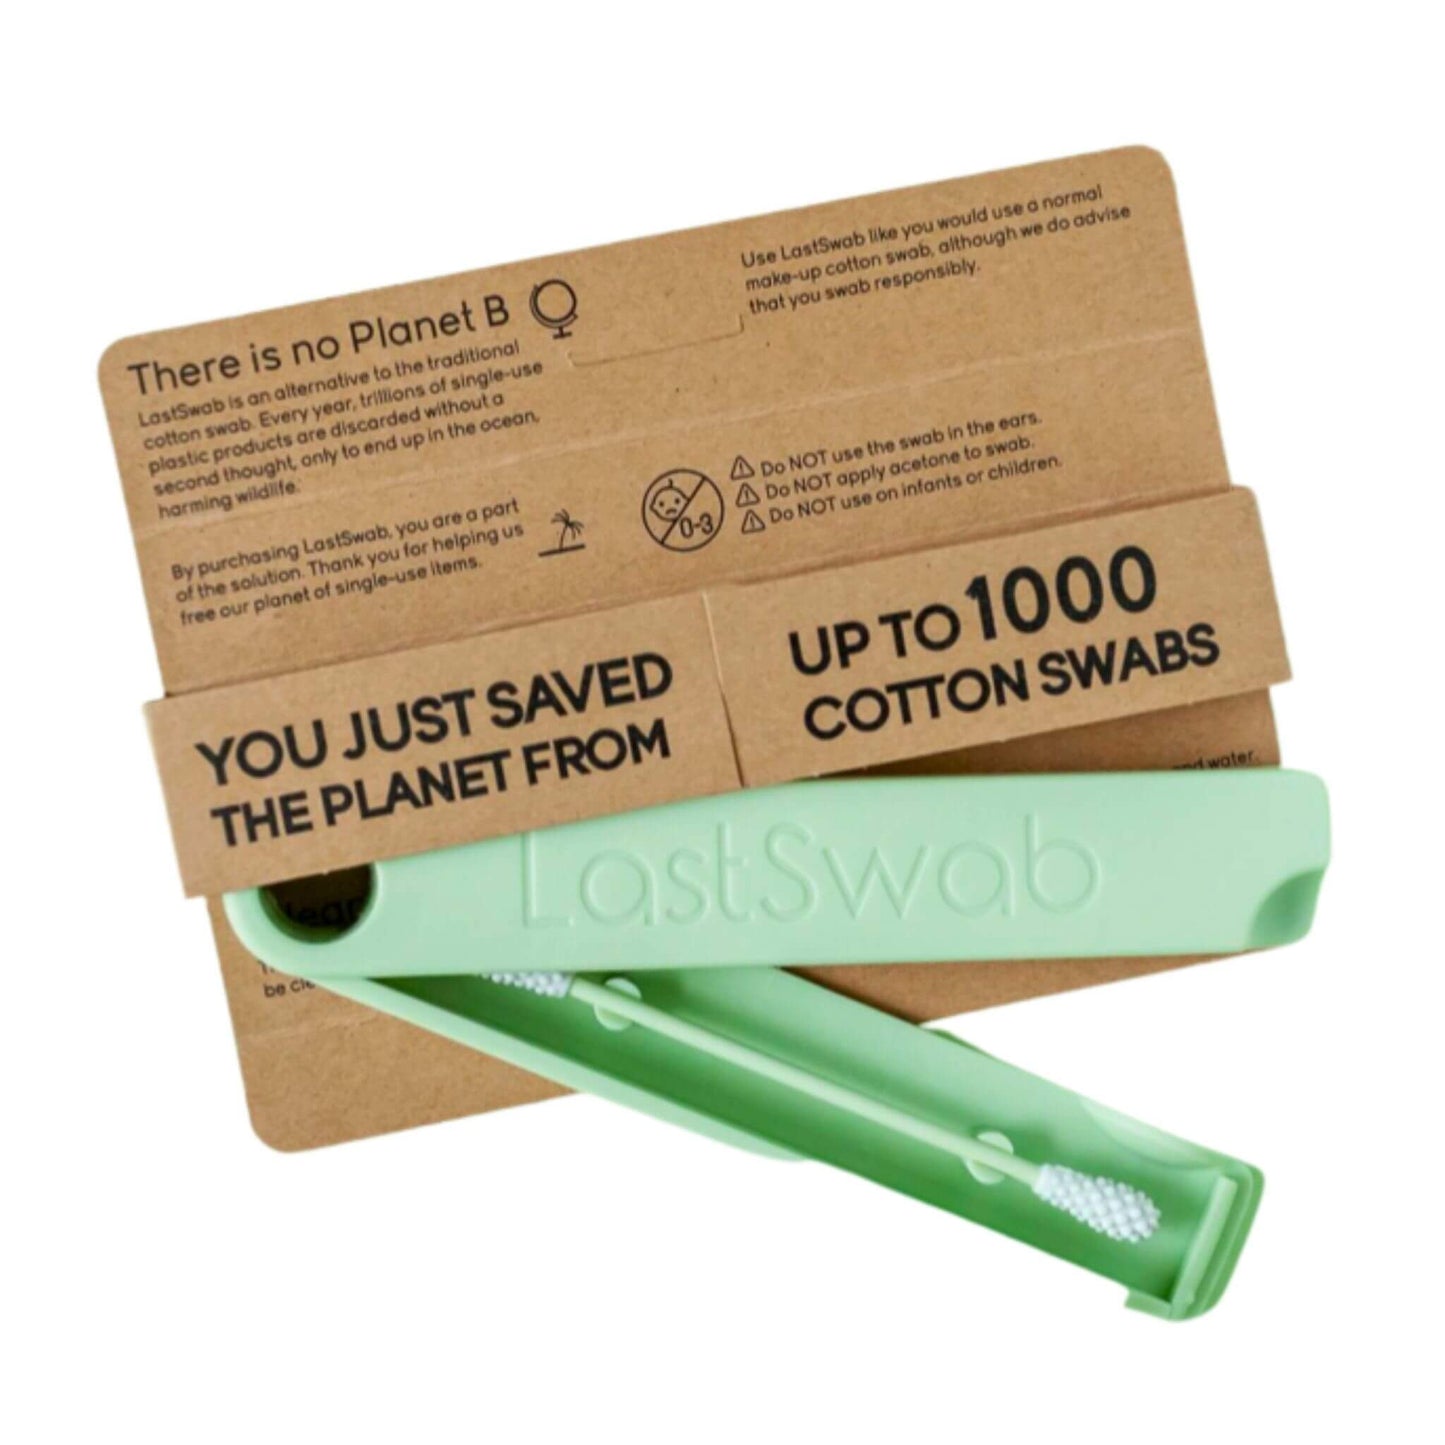 LastSwab Reusable Cotton Swabs